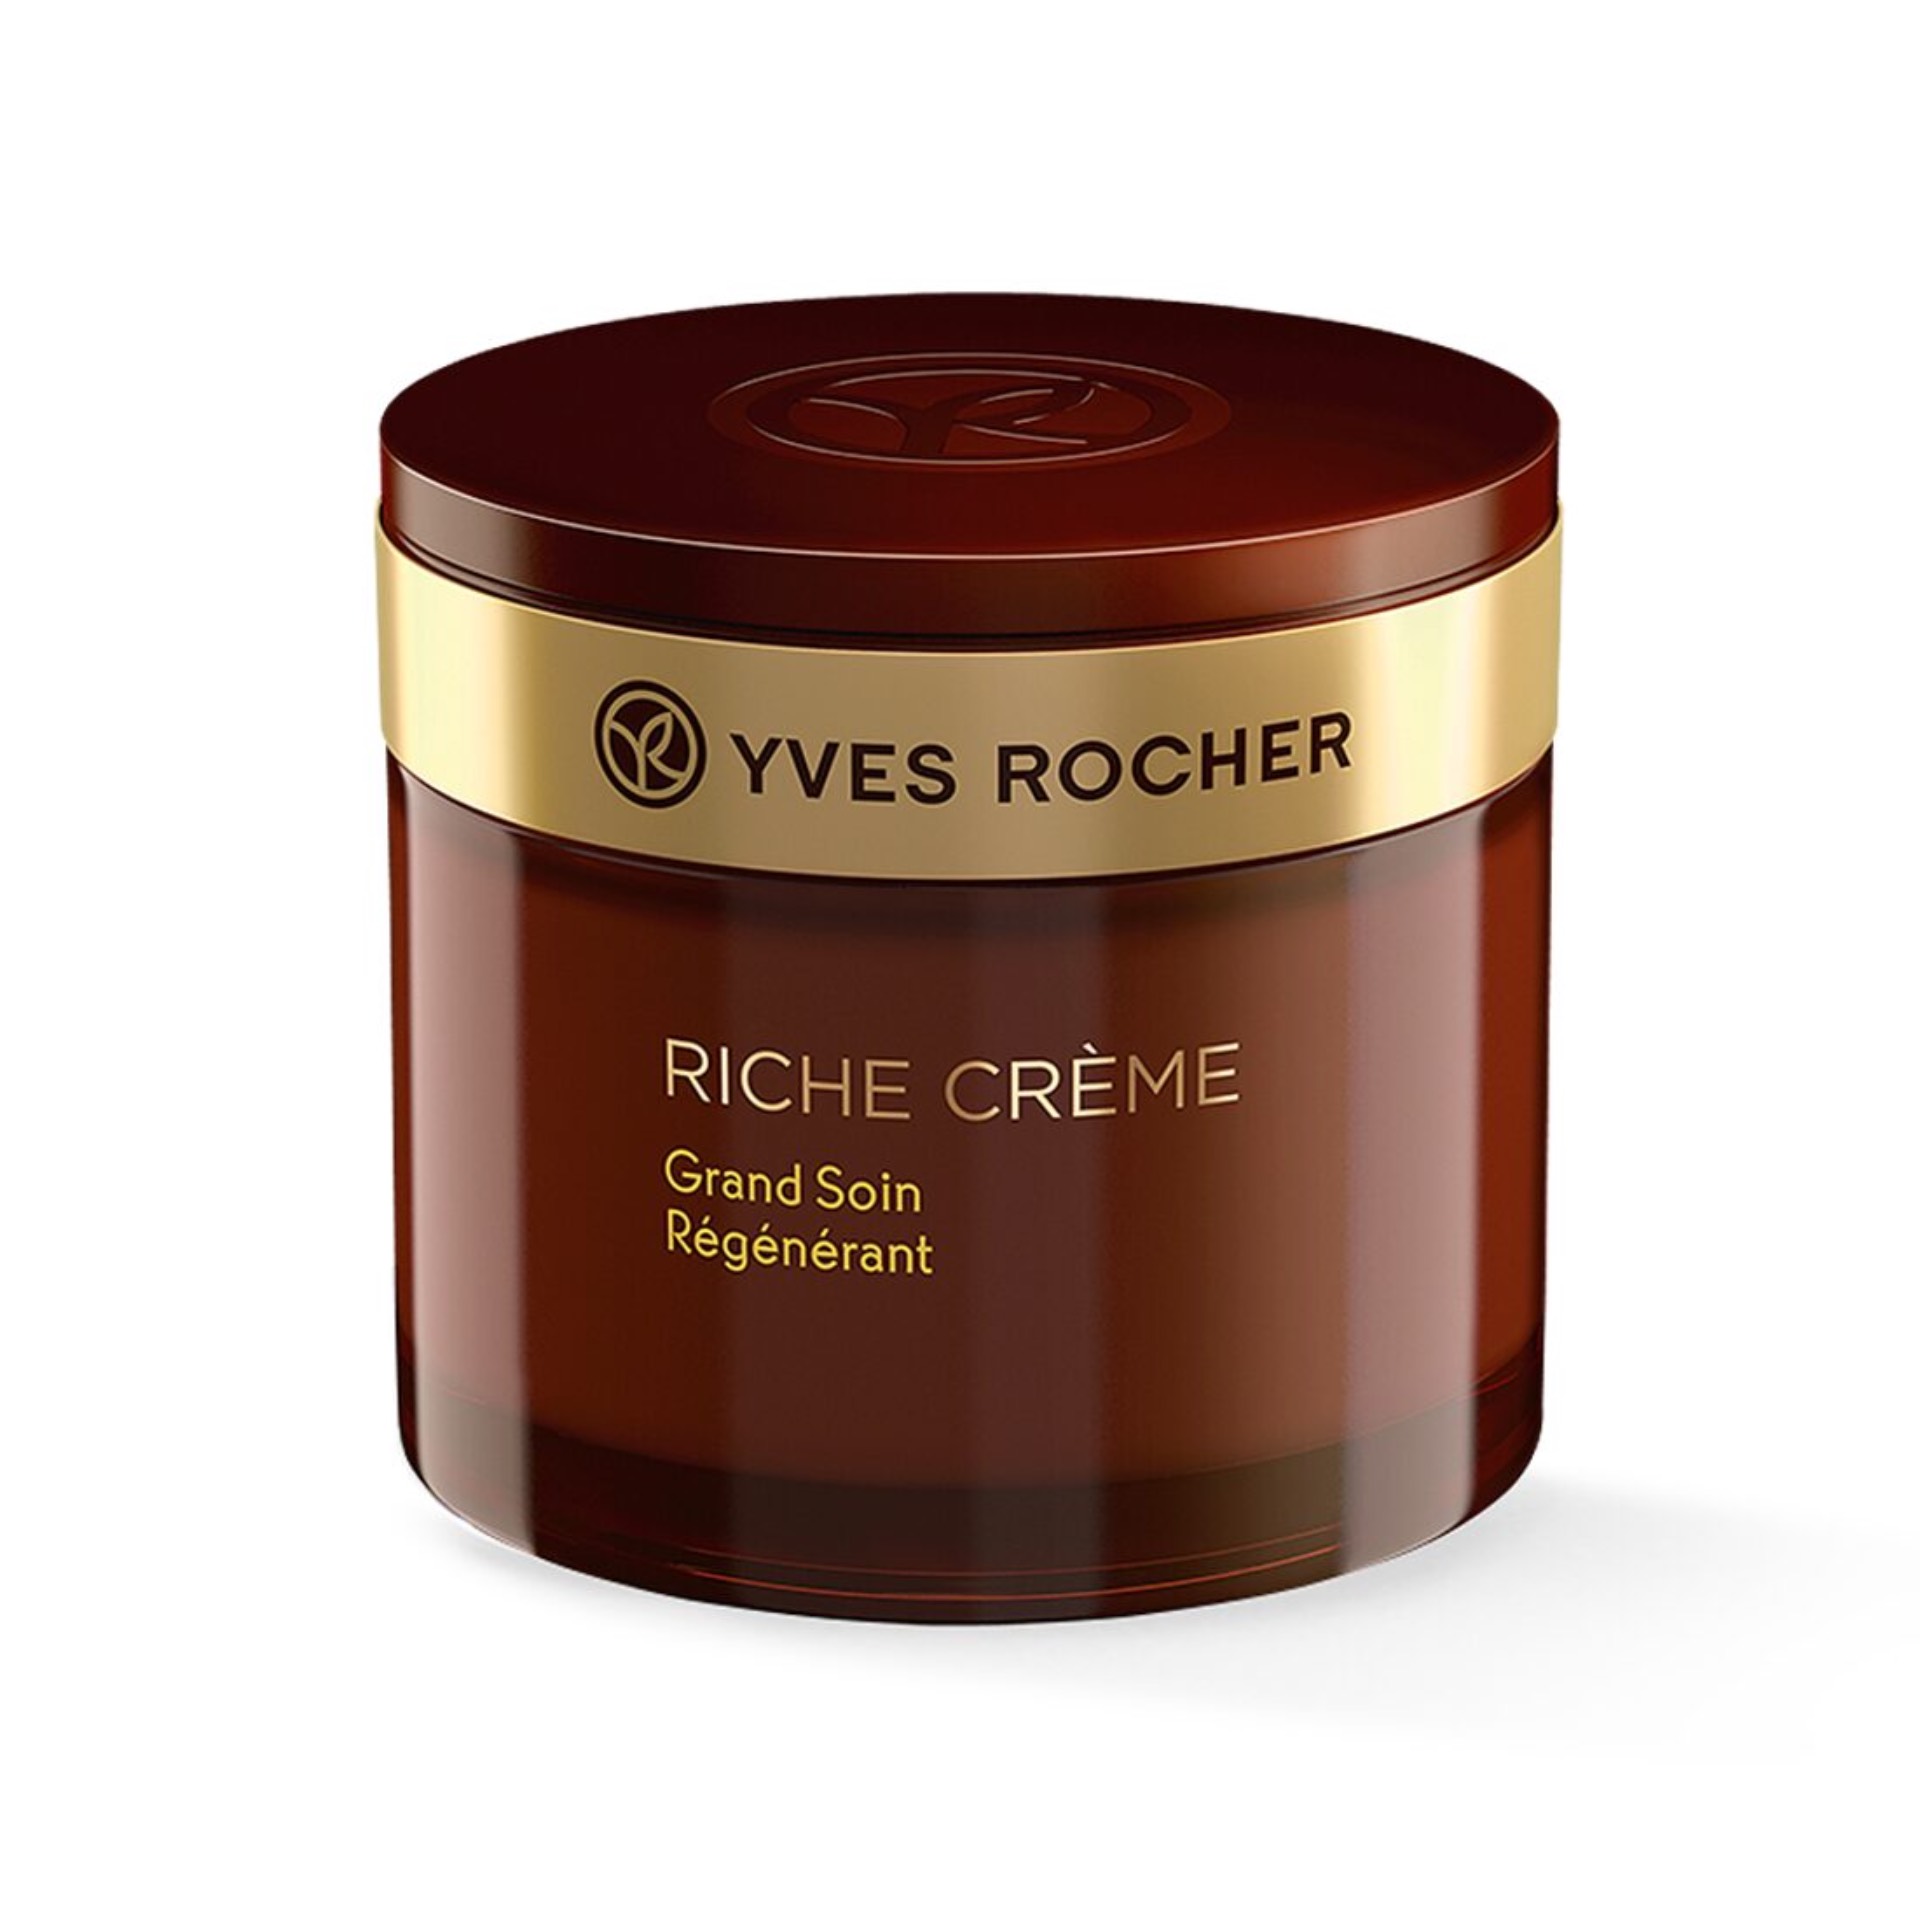 5. Yves Rocher